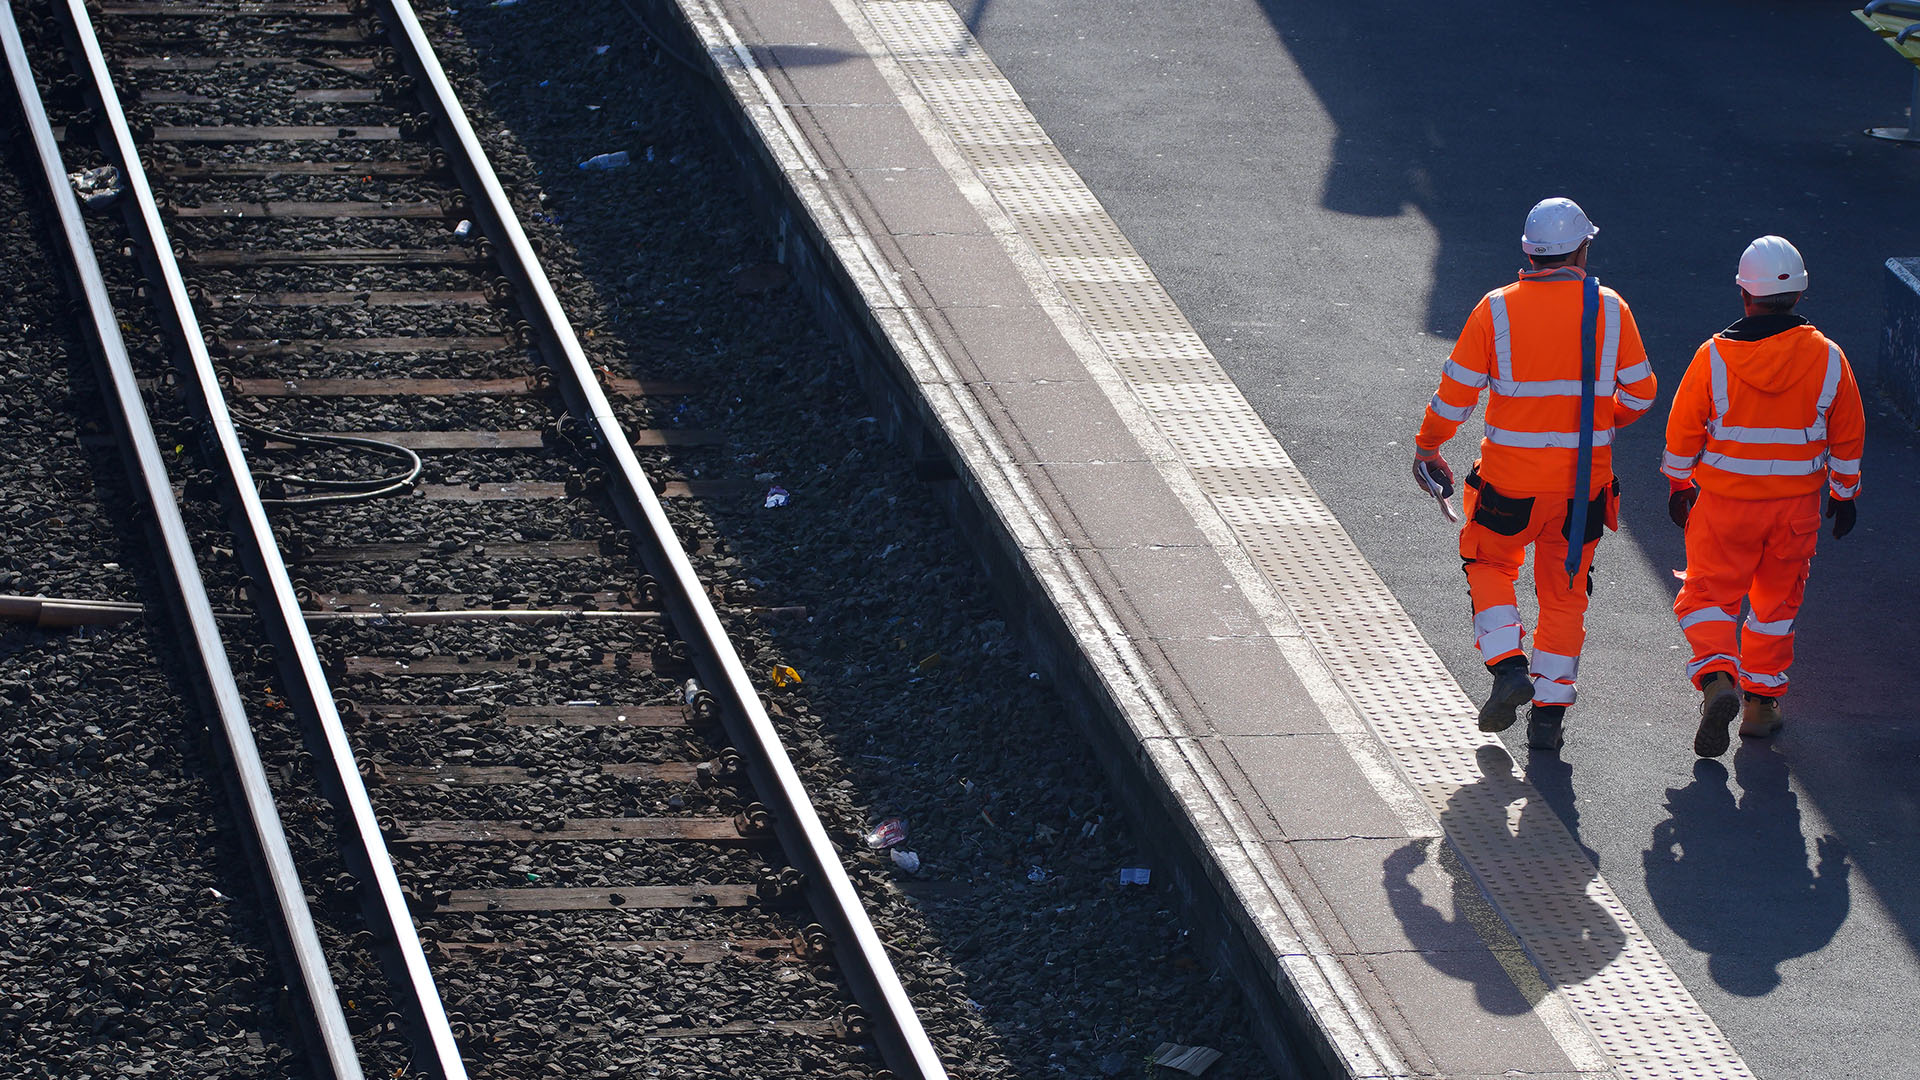 Bahnmitarbeiter in Warnkleidung gehen entlang eines Bahngleises im Bahnhof Hunts Cross, Großbritannien. | dpa